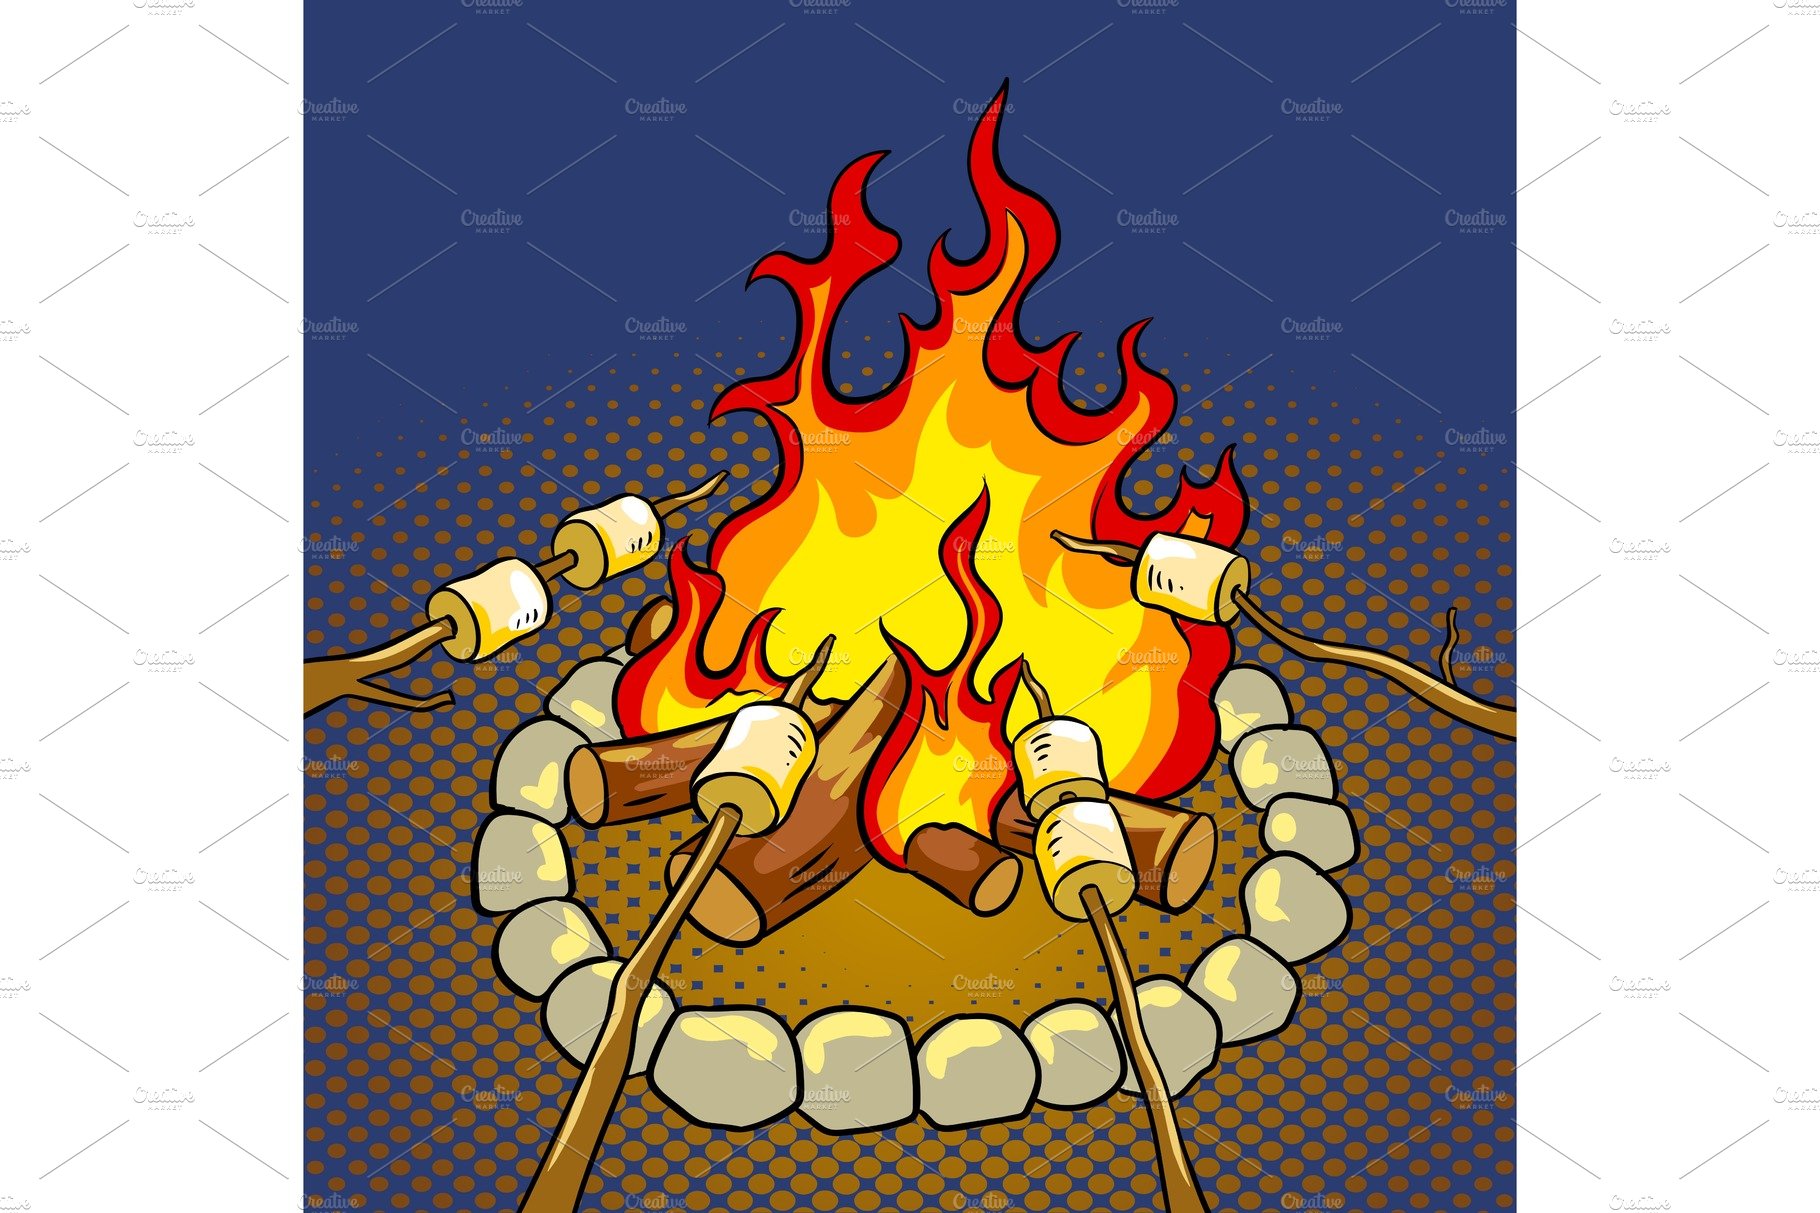 Marshmallow on bonfire pop art vector illustration cover image.